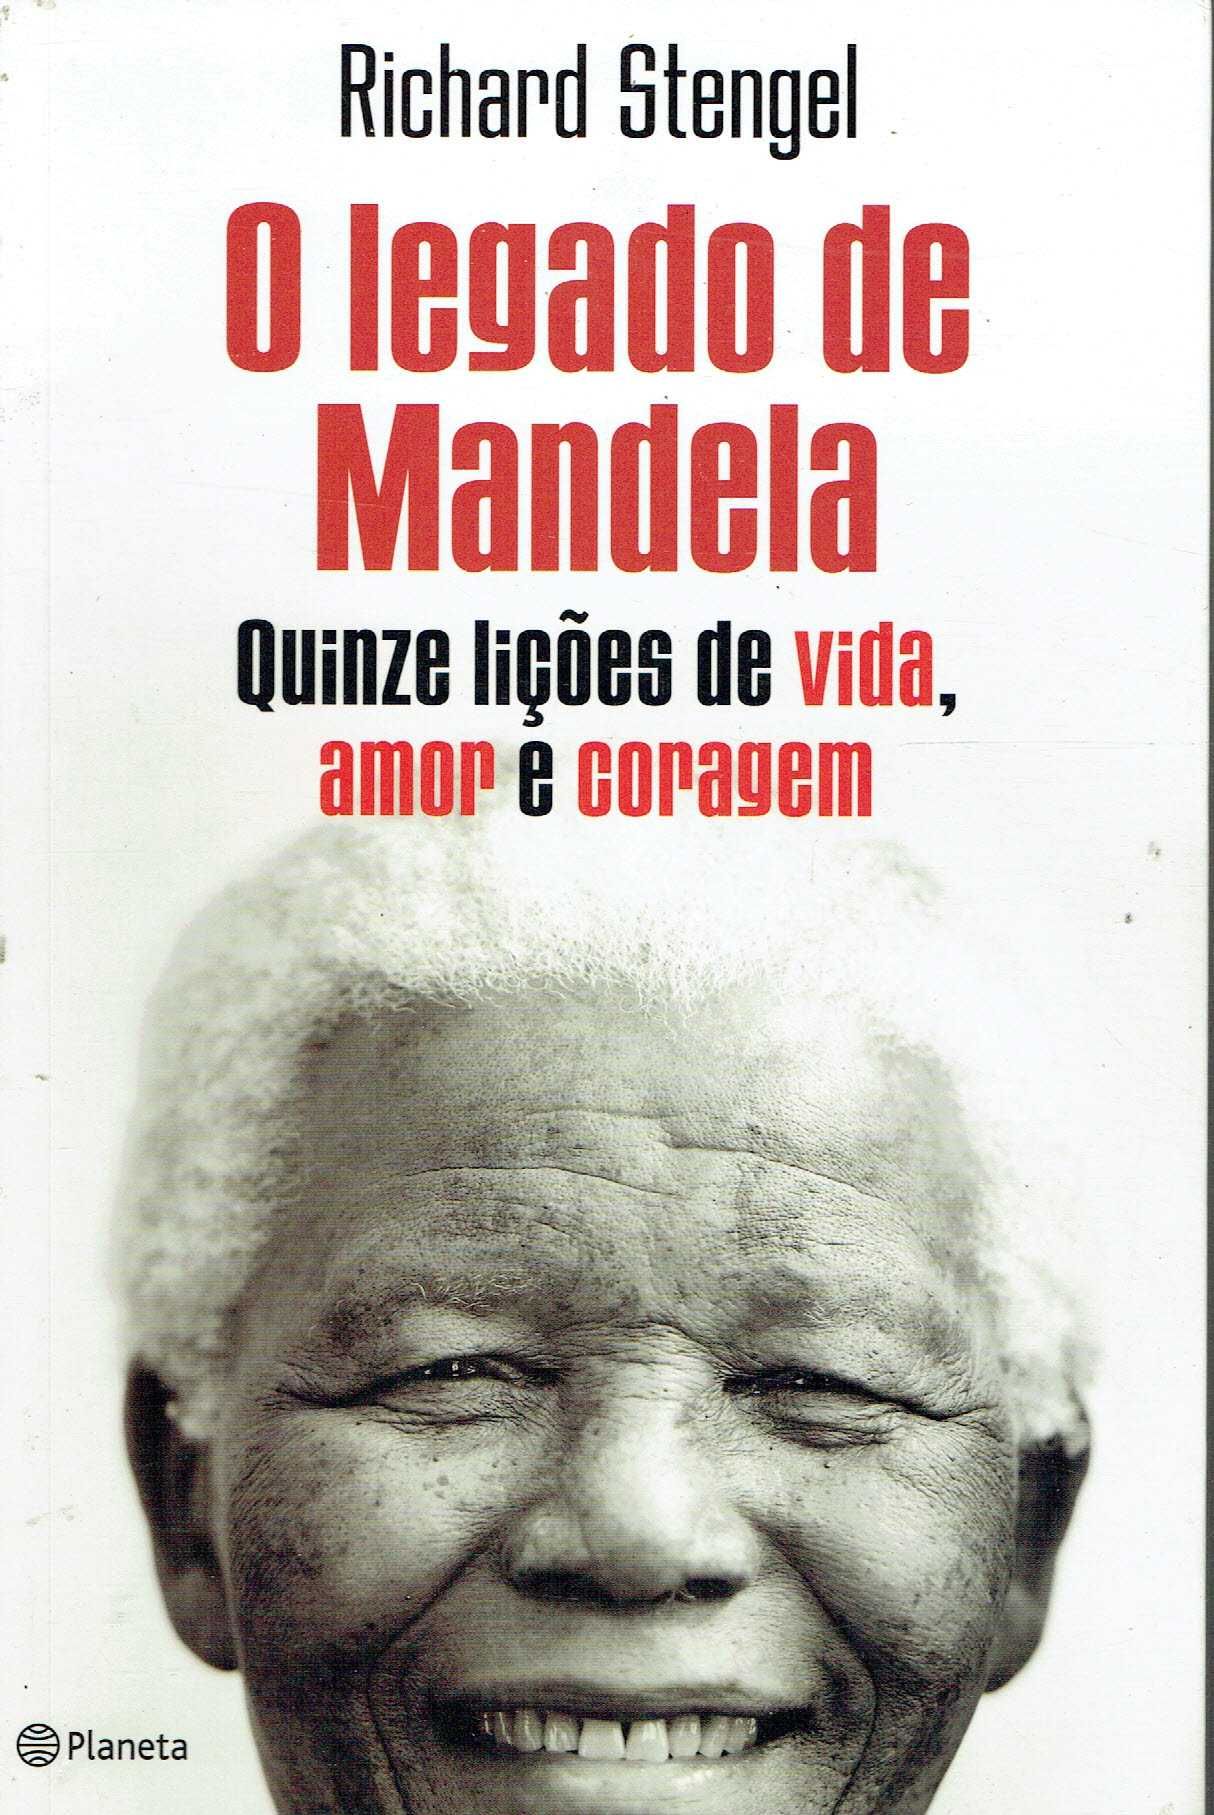 14655

O Legado de Mandela
de Richard Stengel